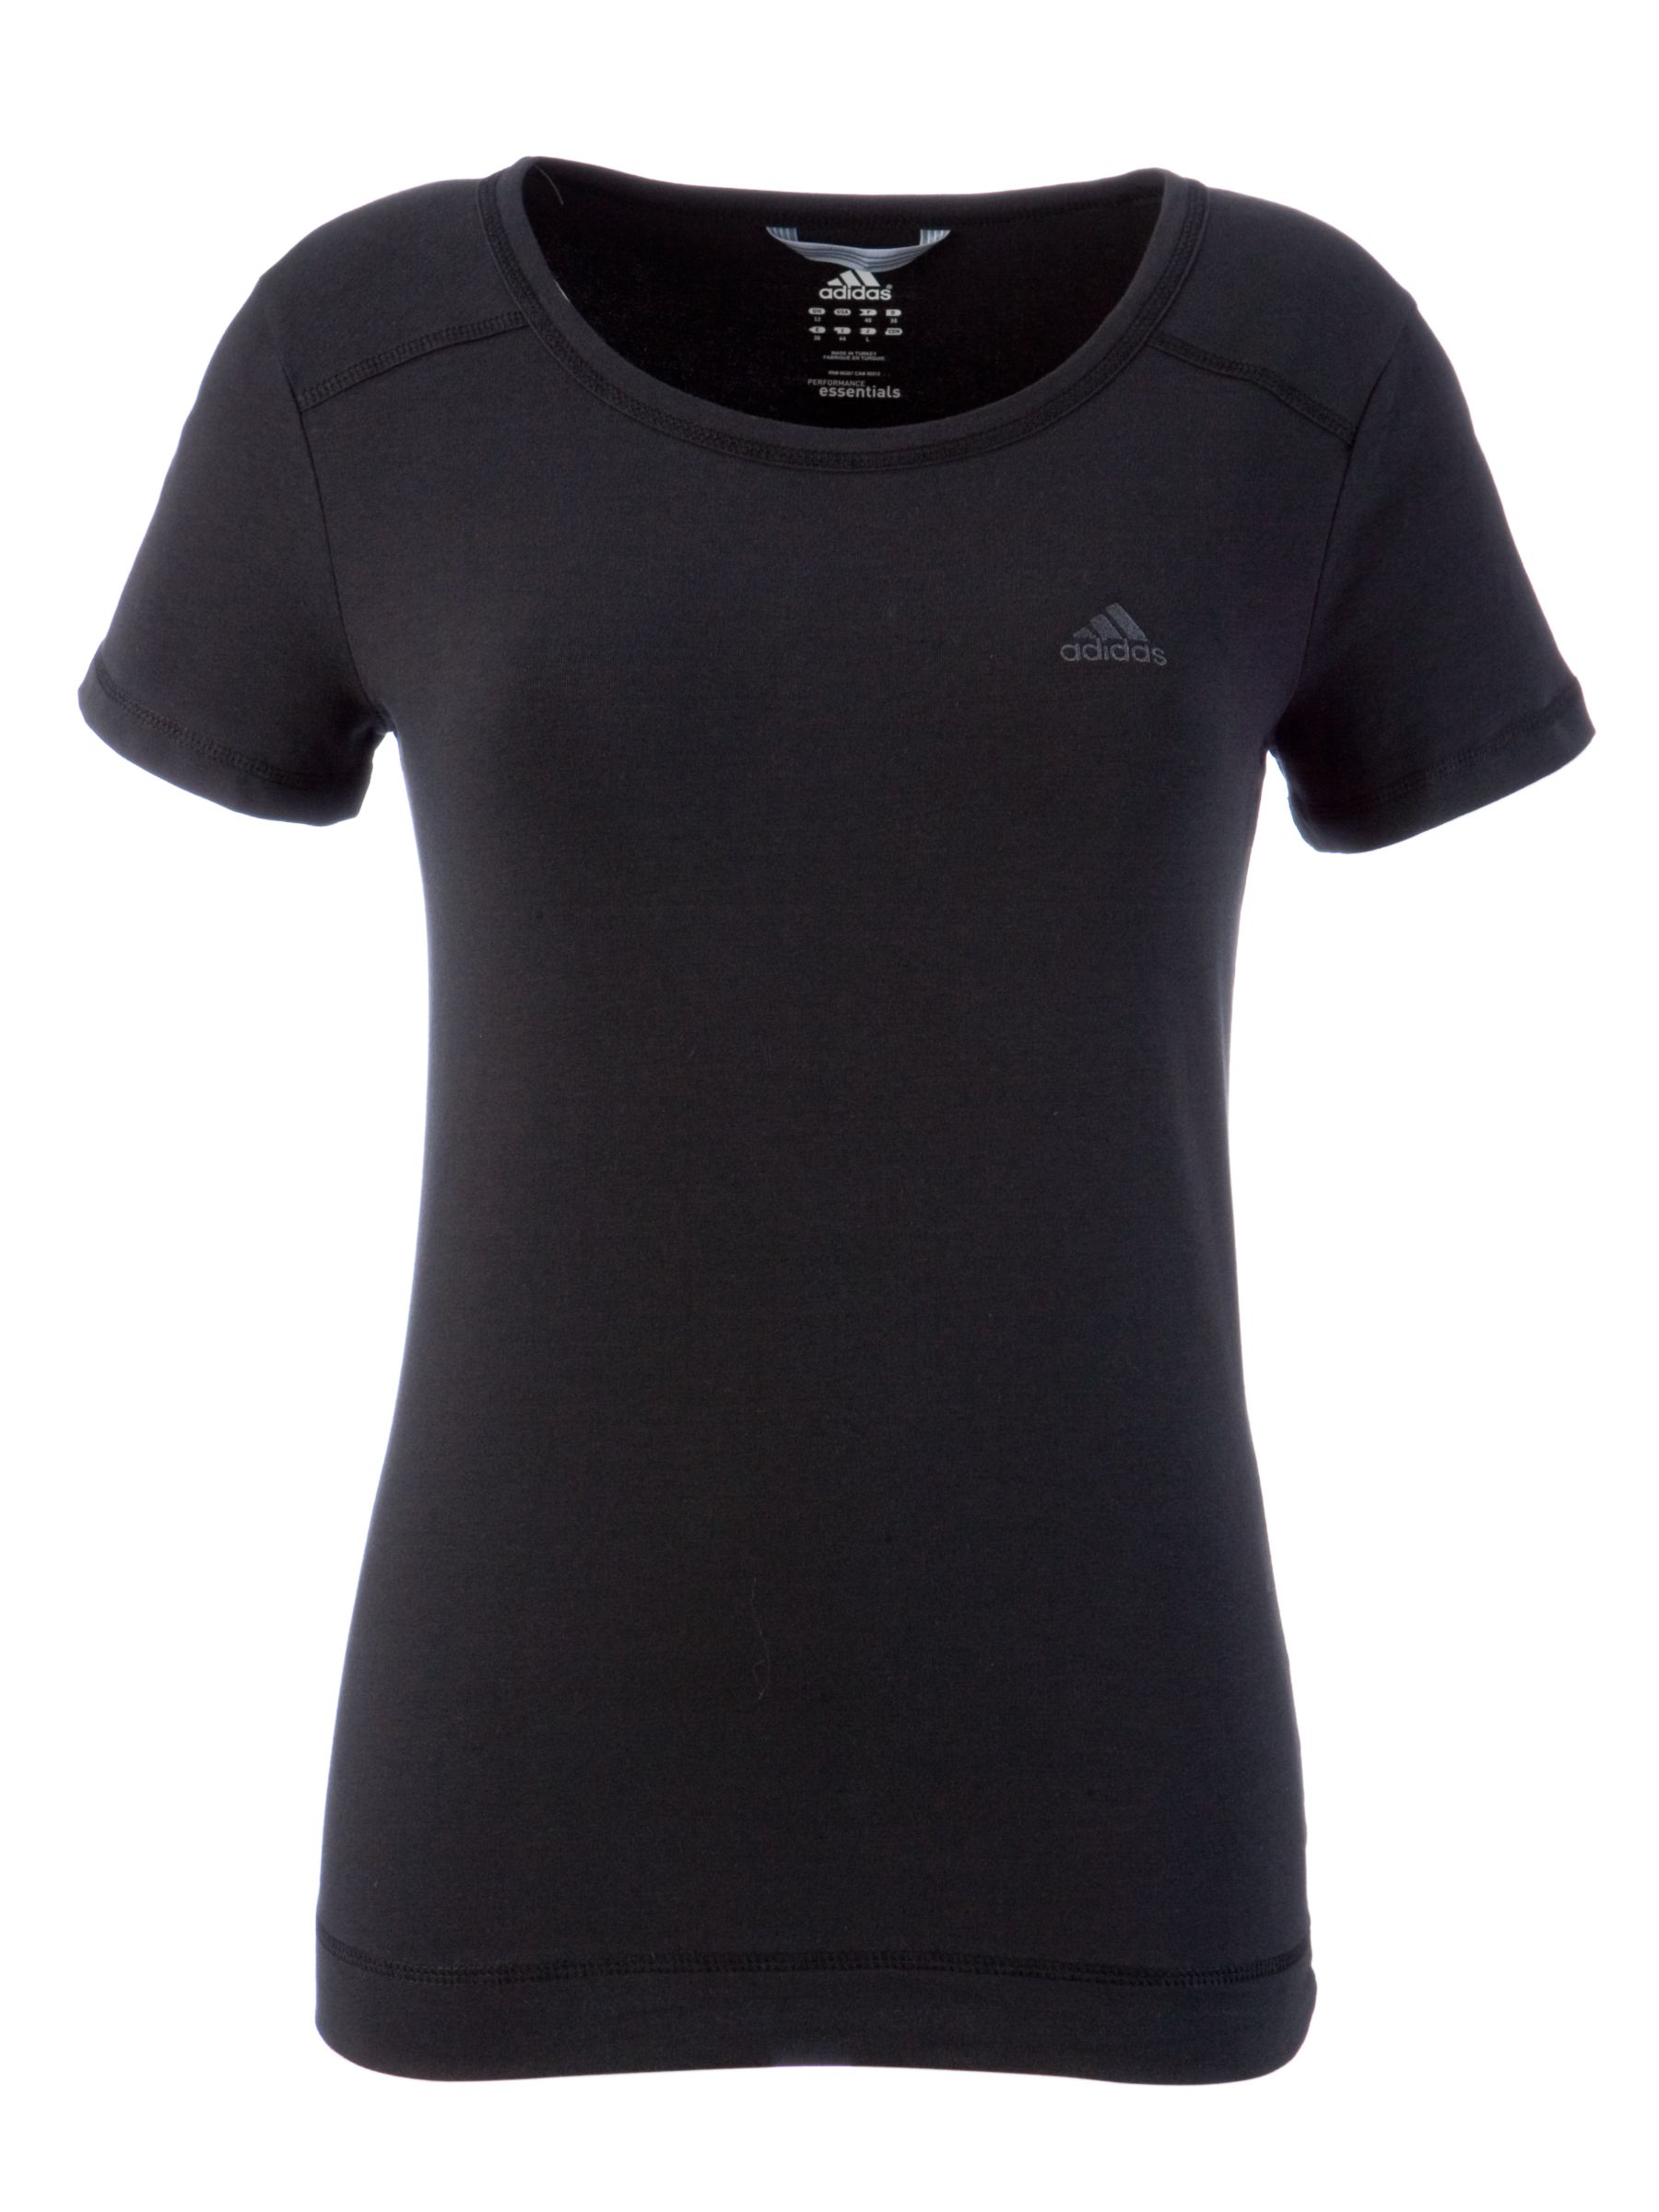 Essential Short Sleeve T-Shirt, Black